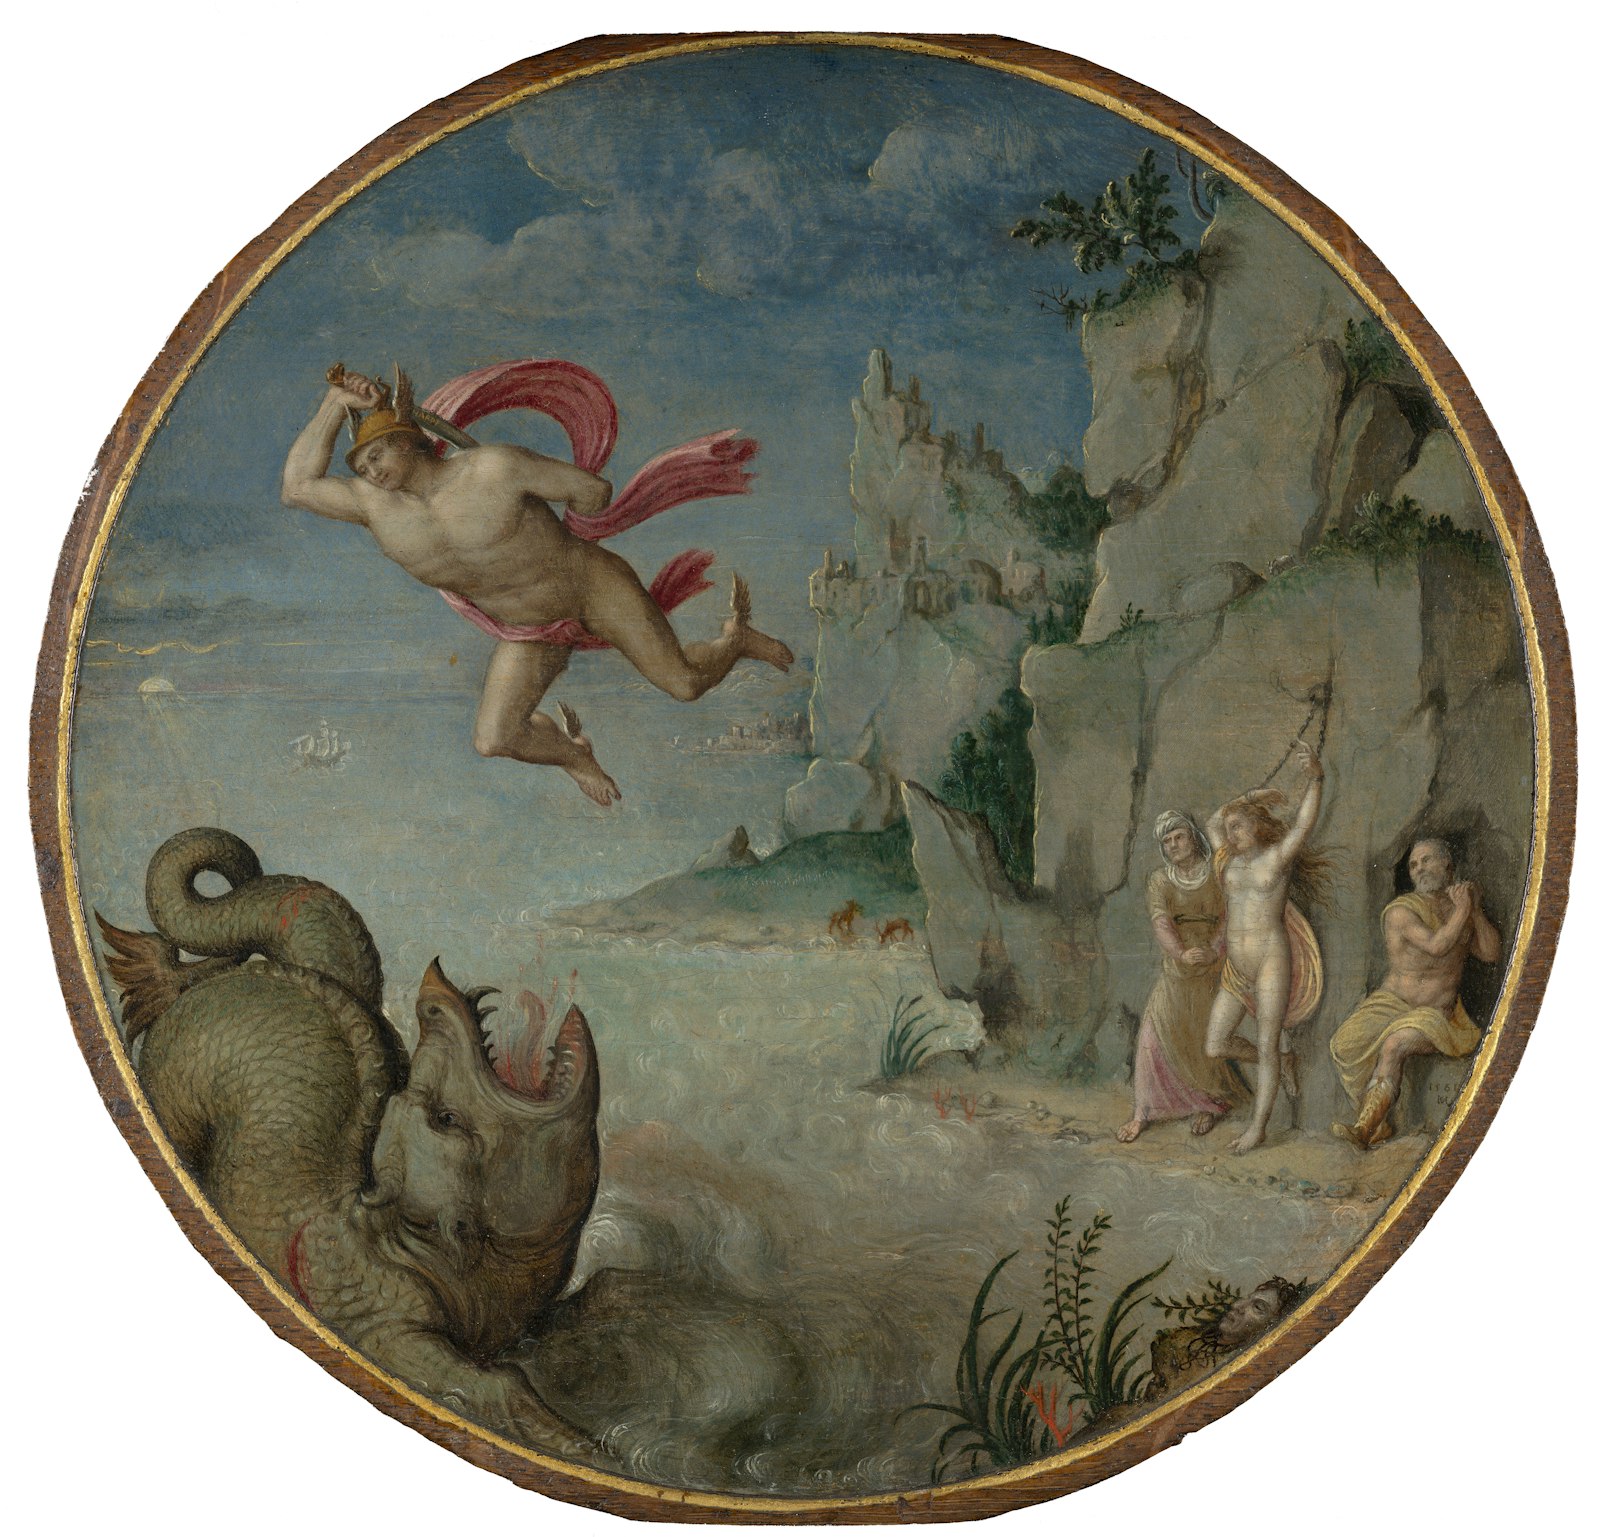 Perseus and Andromeda by Jan Keynooghe, 1561